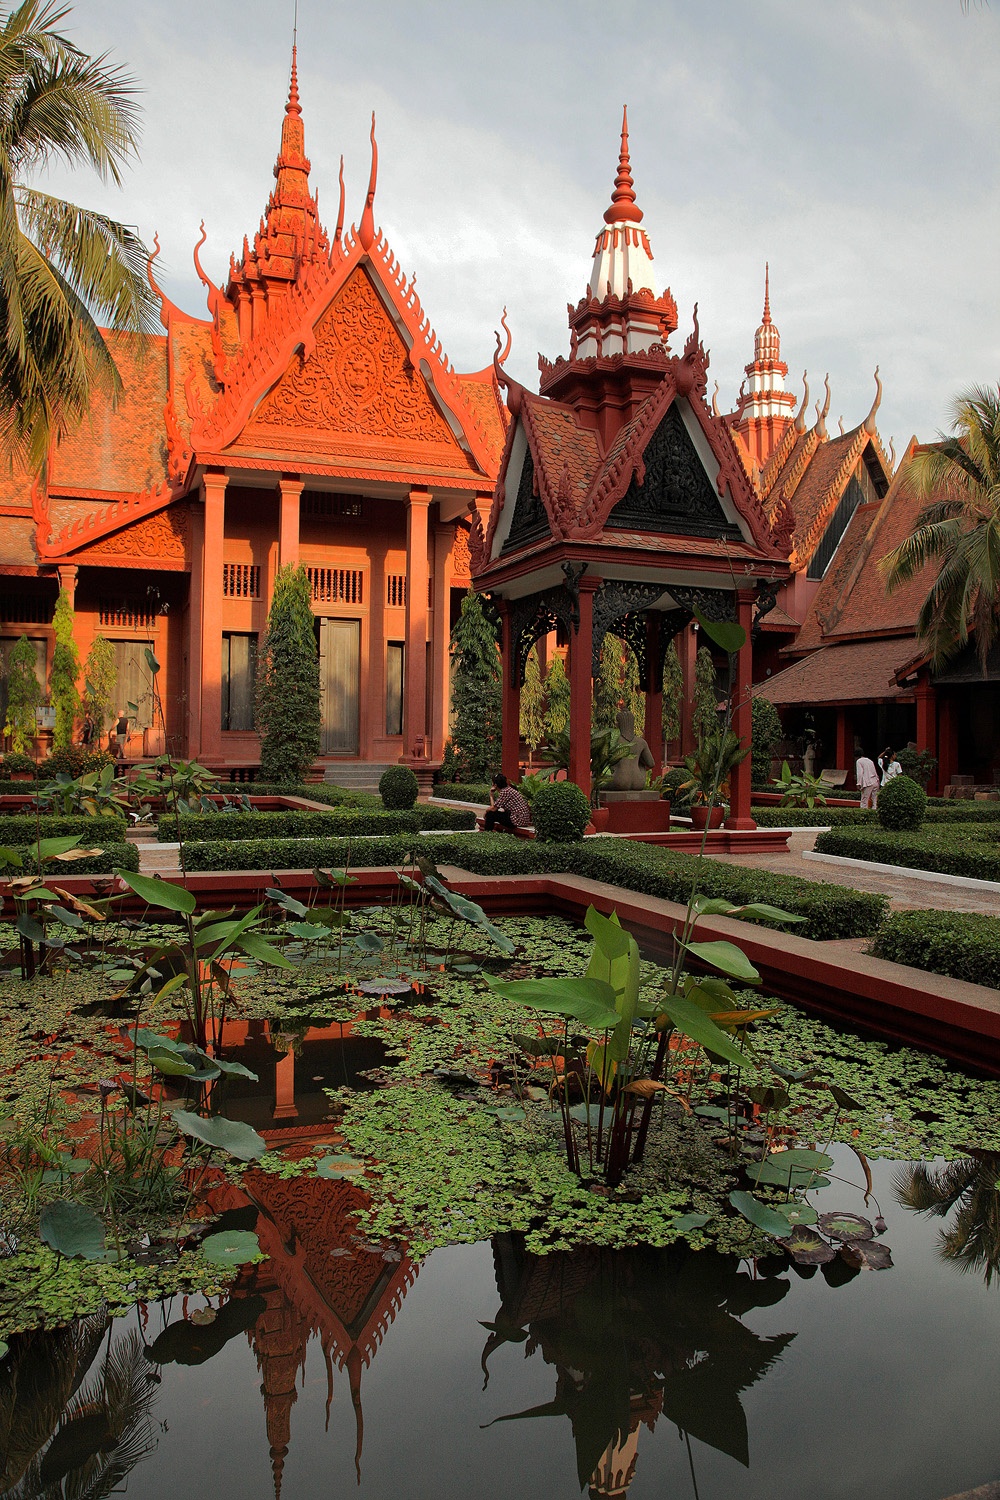 bill-hocker-national-museum-courtyard-phnom-penh-cambodia-2010